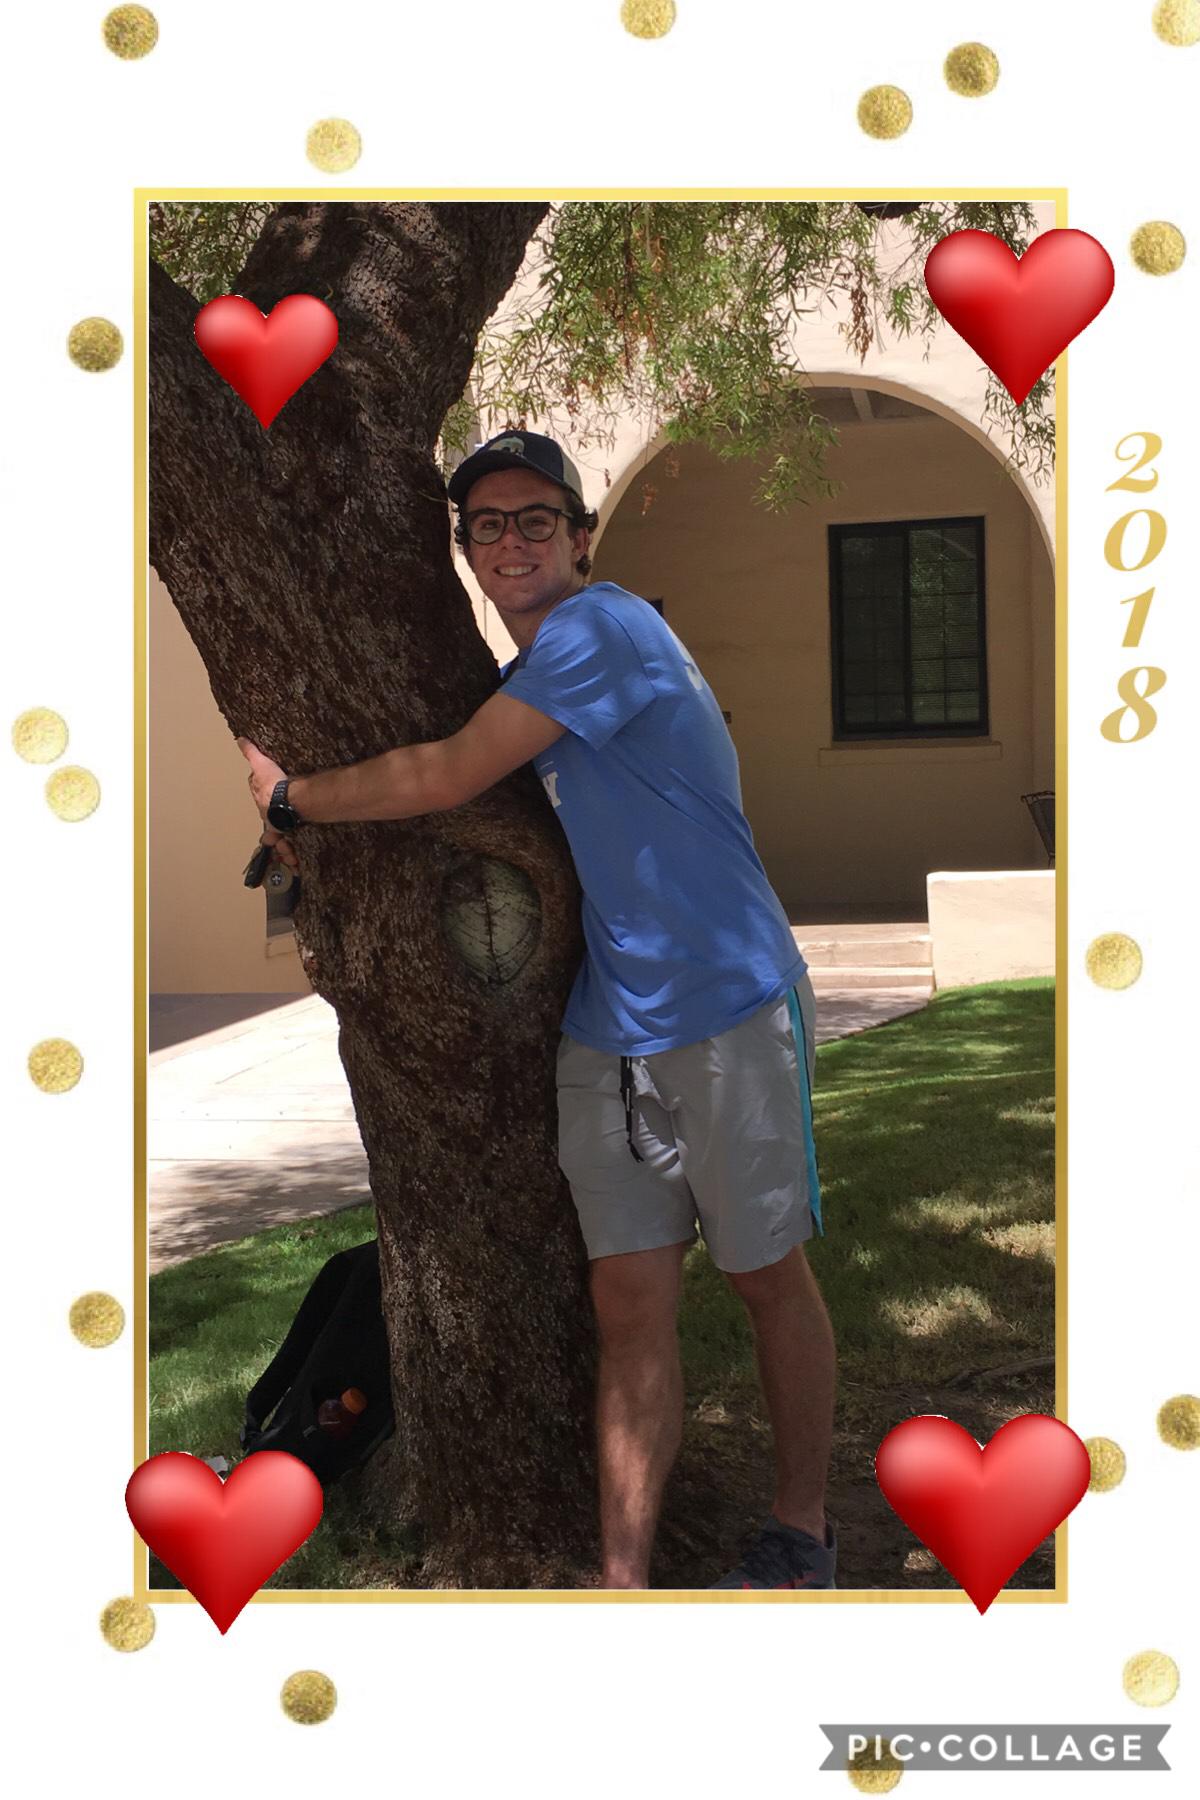 Update
Drew Burns Brophy Alumni’s first true love